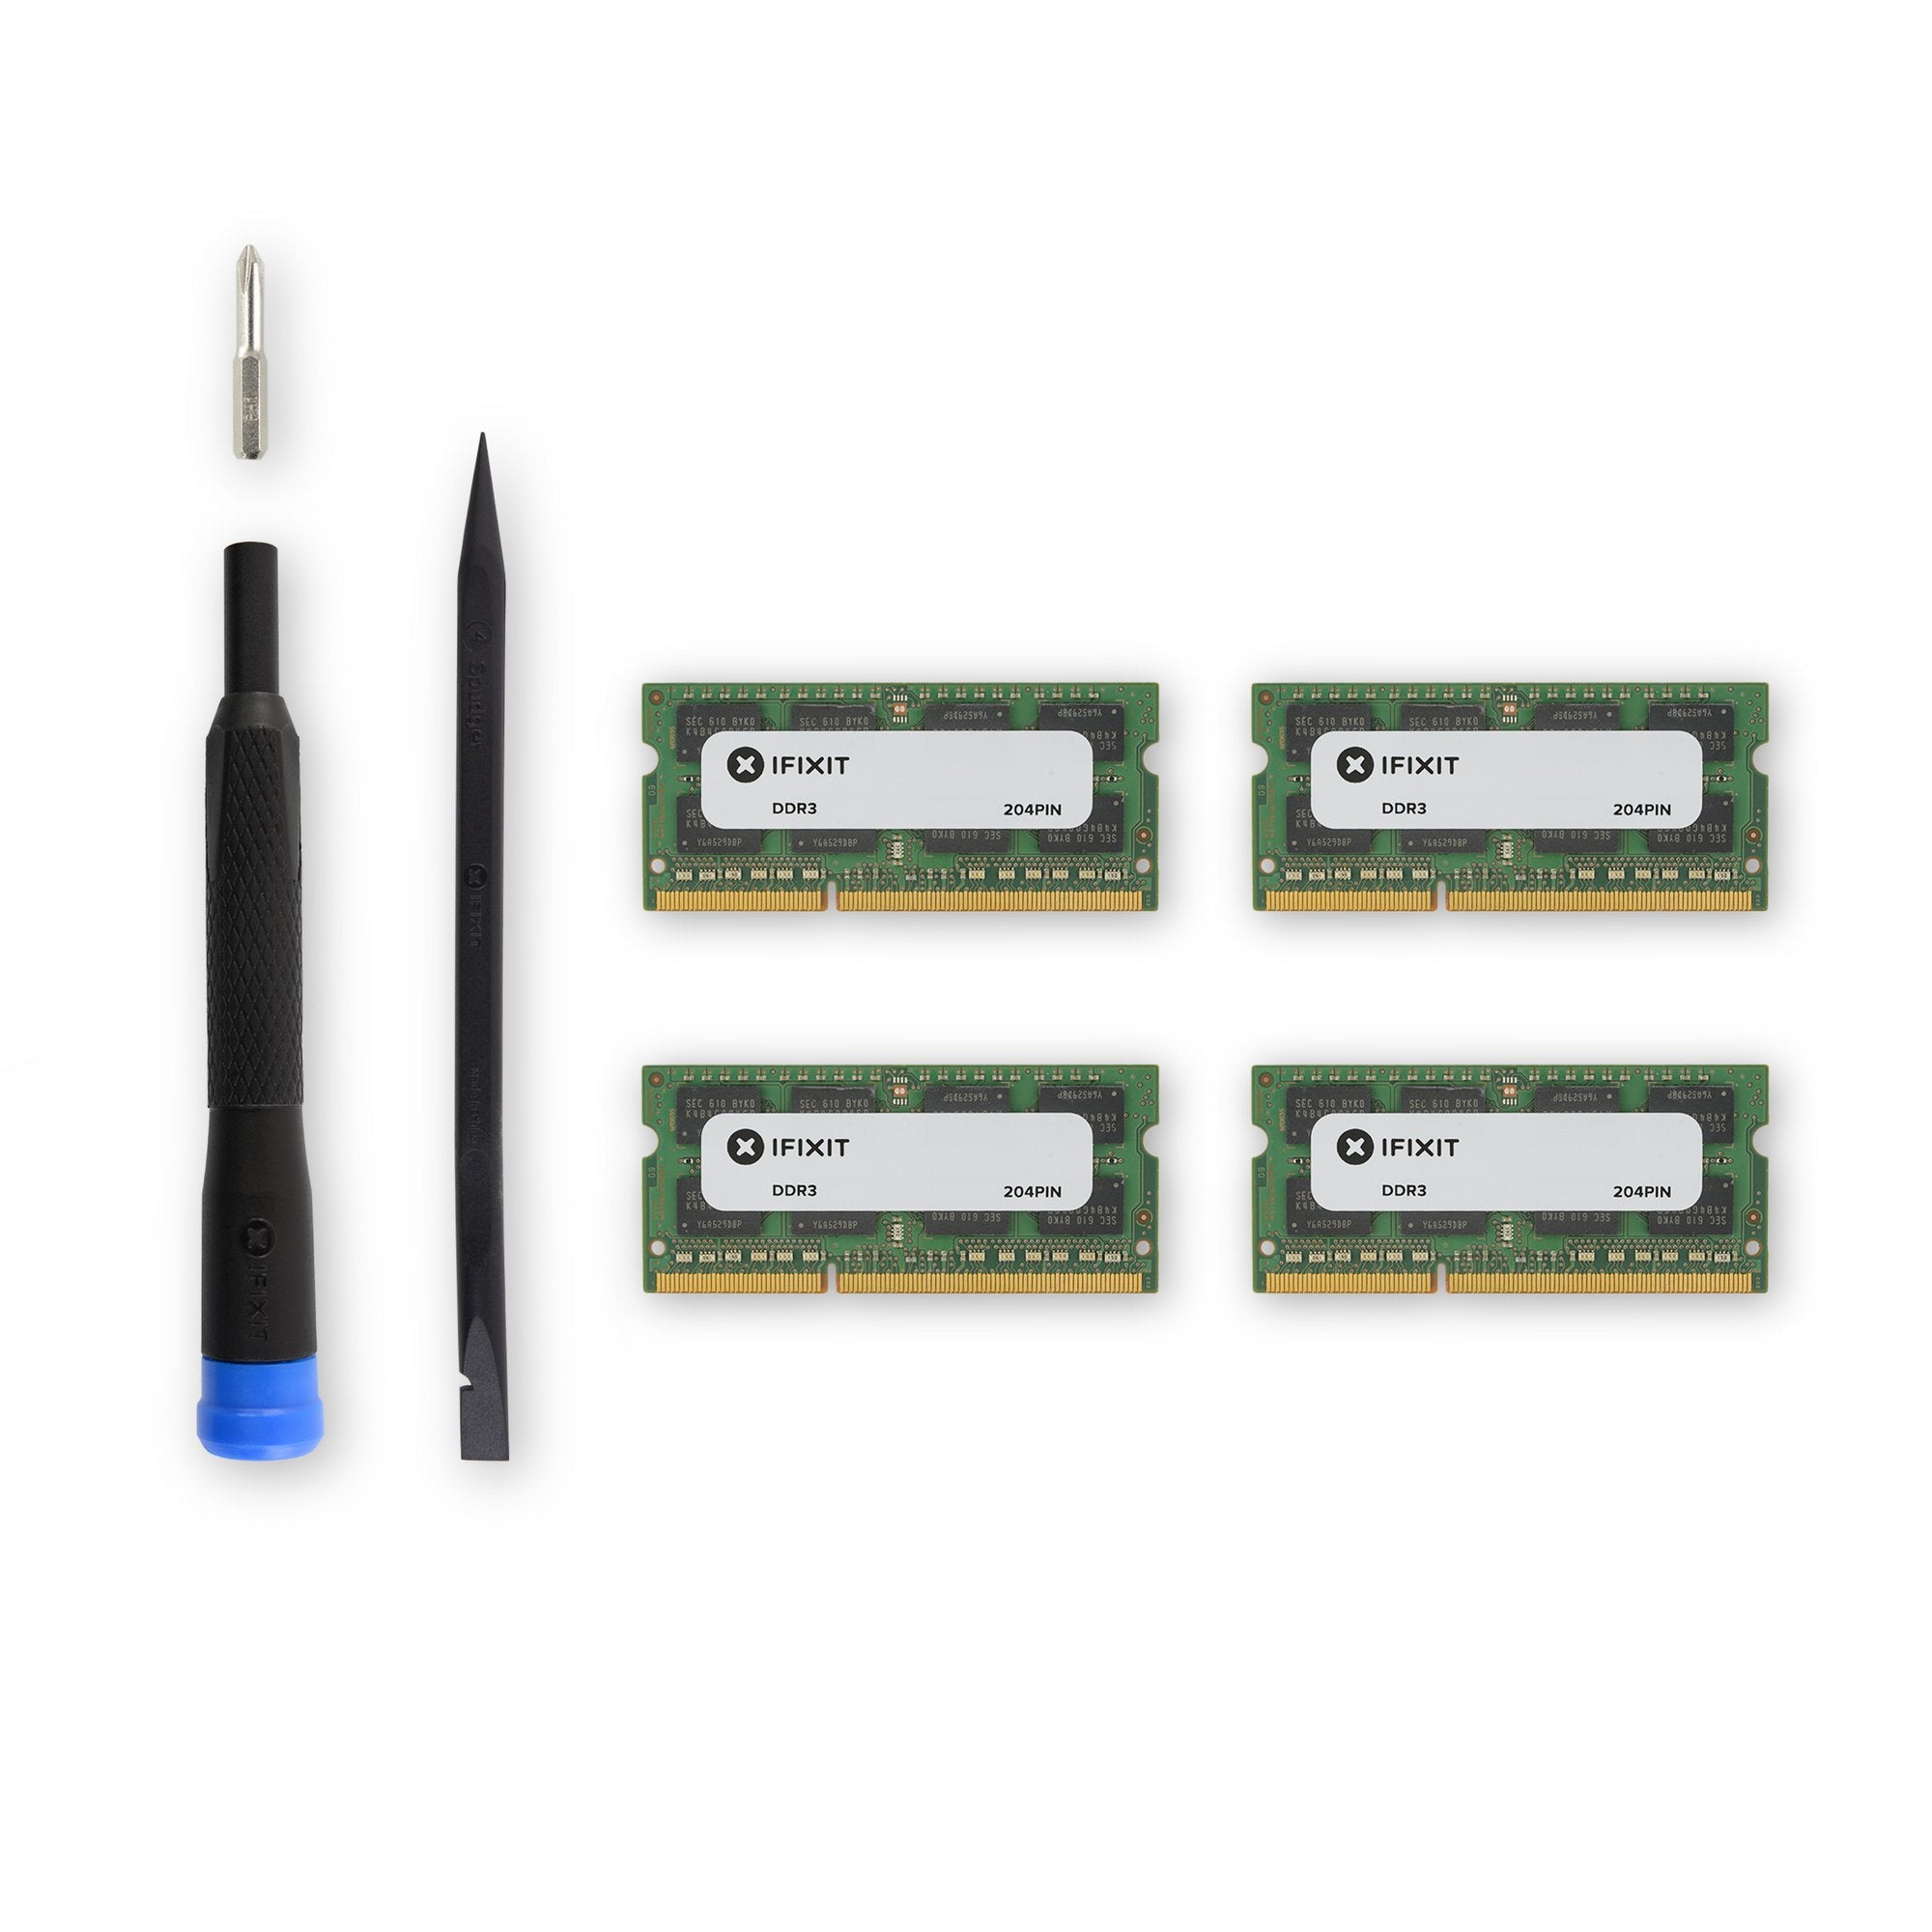 iMac Intel 21.5" EMC (Mid 2011) Maxxer Kit